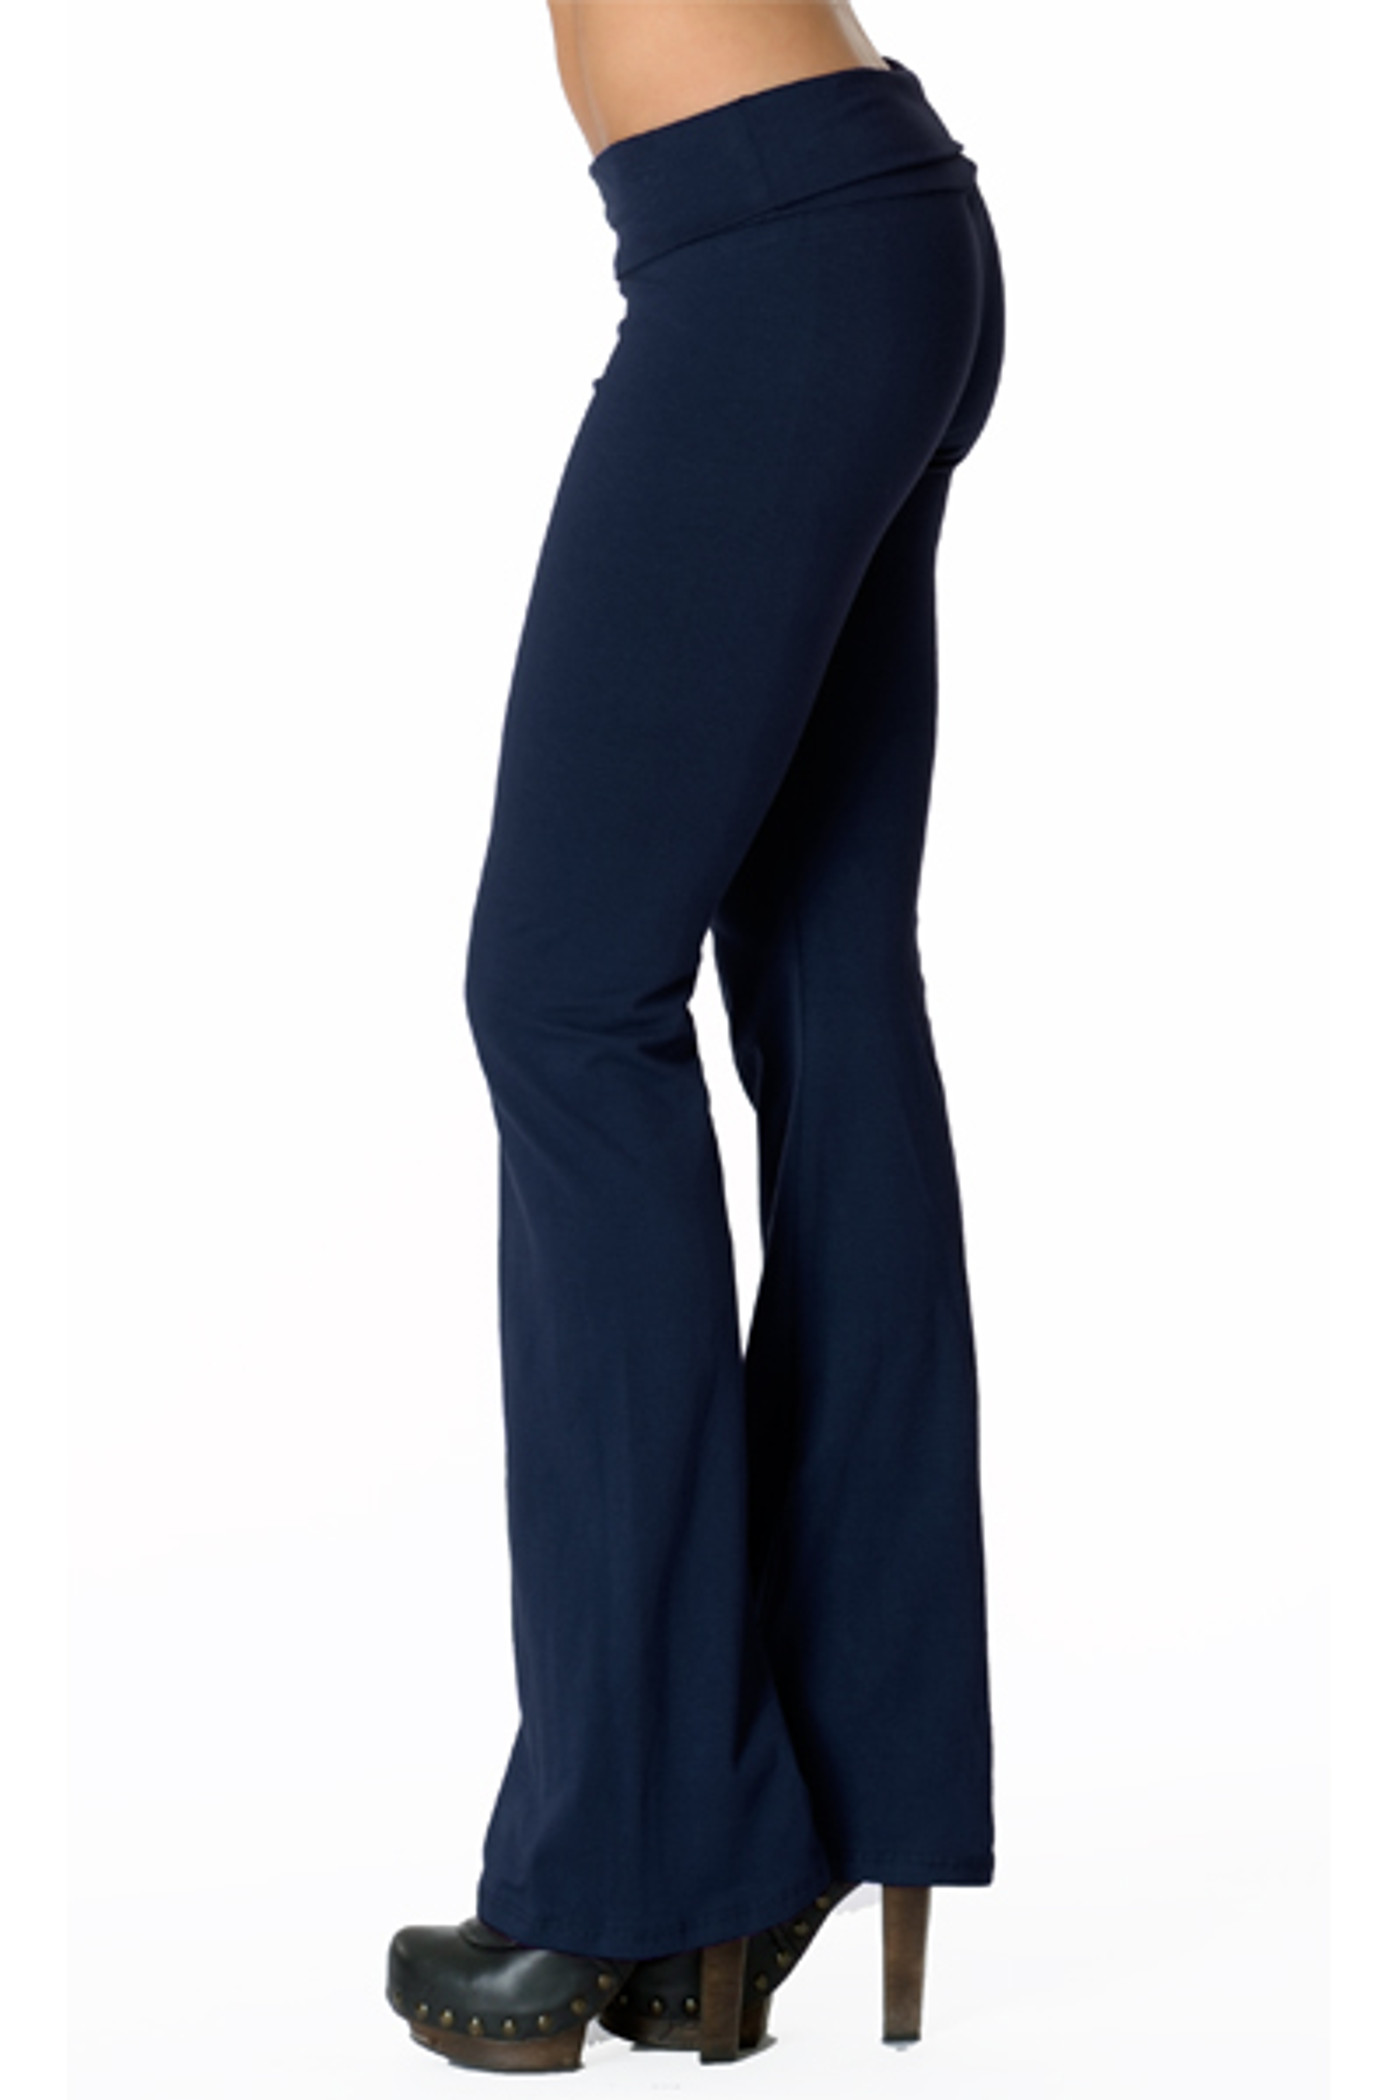 HIGH WAIST LEGGINGS Fold Over Waist Yoga Pants Dance Wear Comfy Home Wear  Fold Over Tights Navy -  Canada